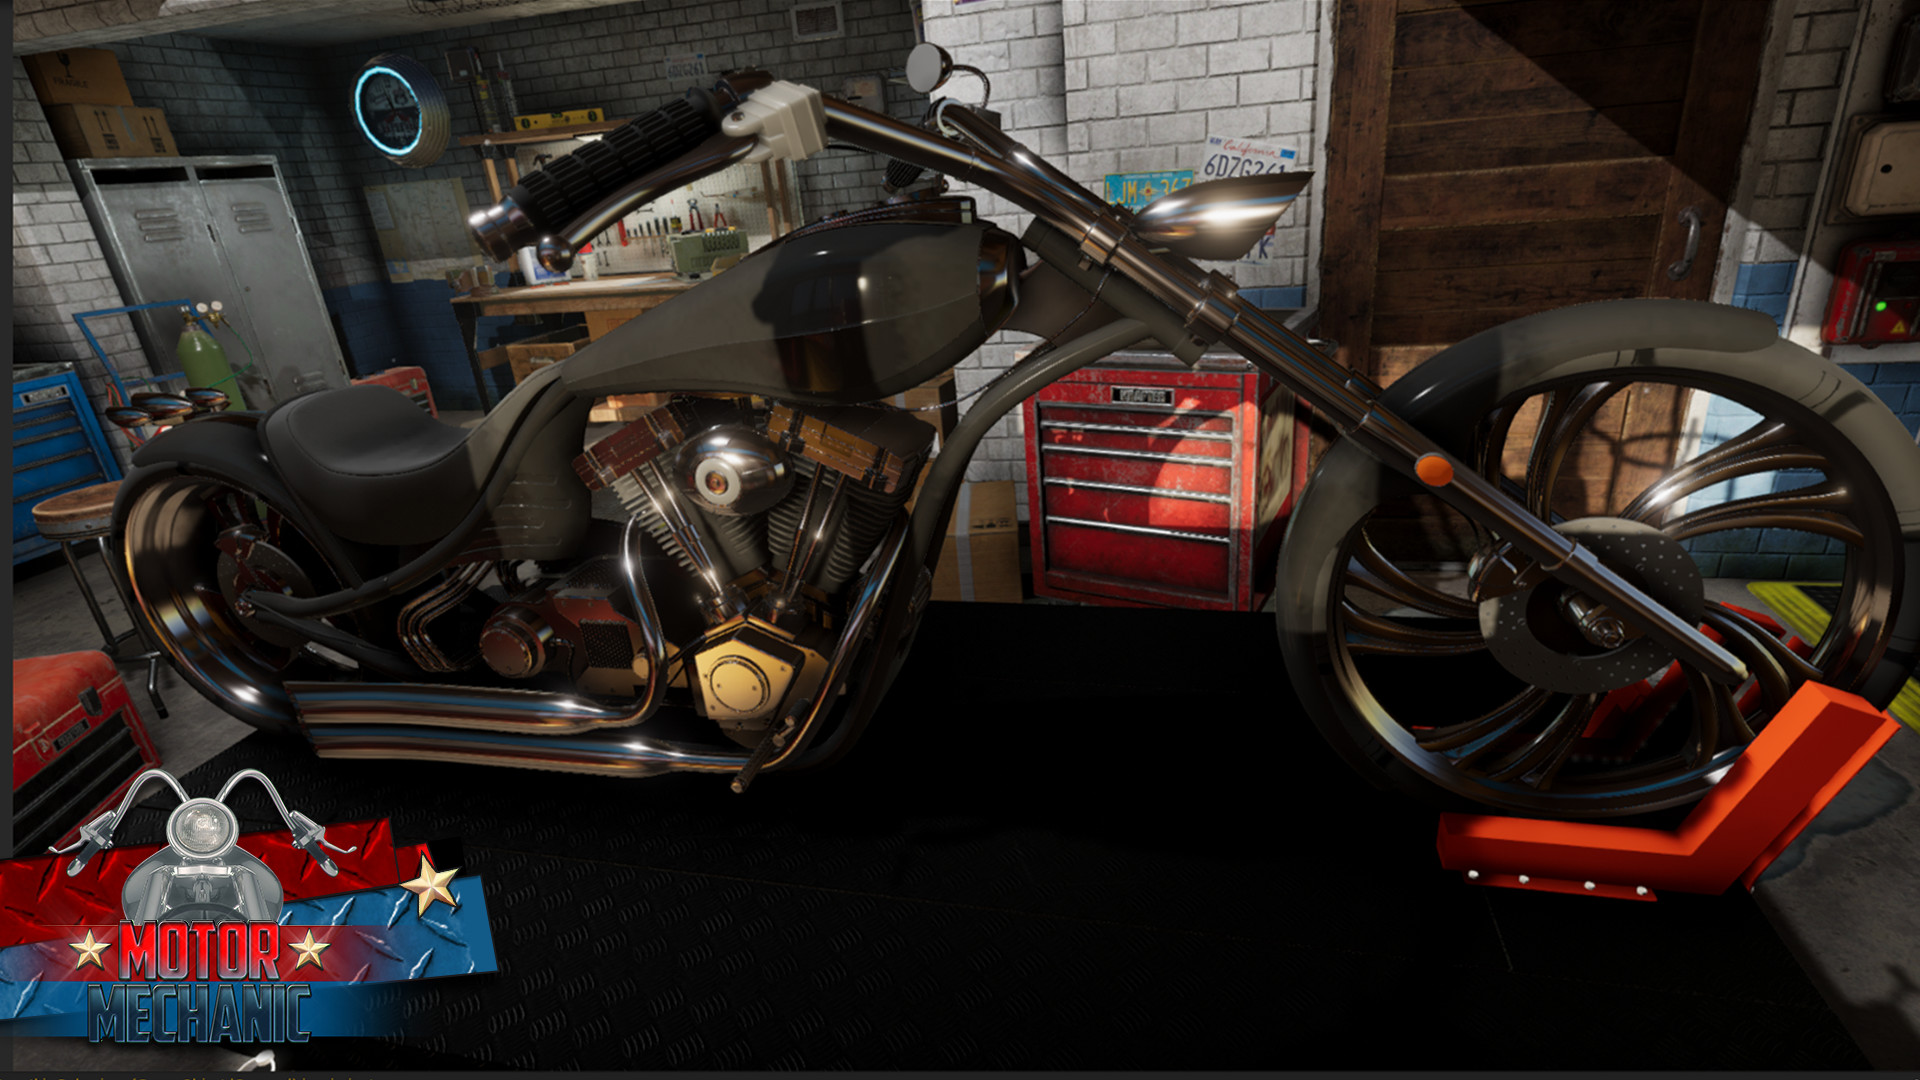 Motorcycle Mechanic Simulator on Steam